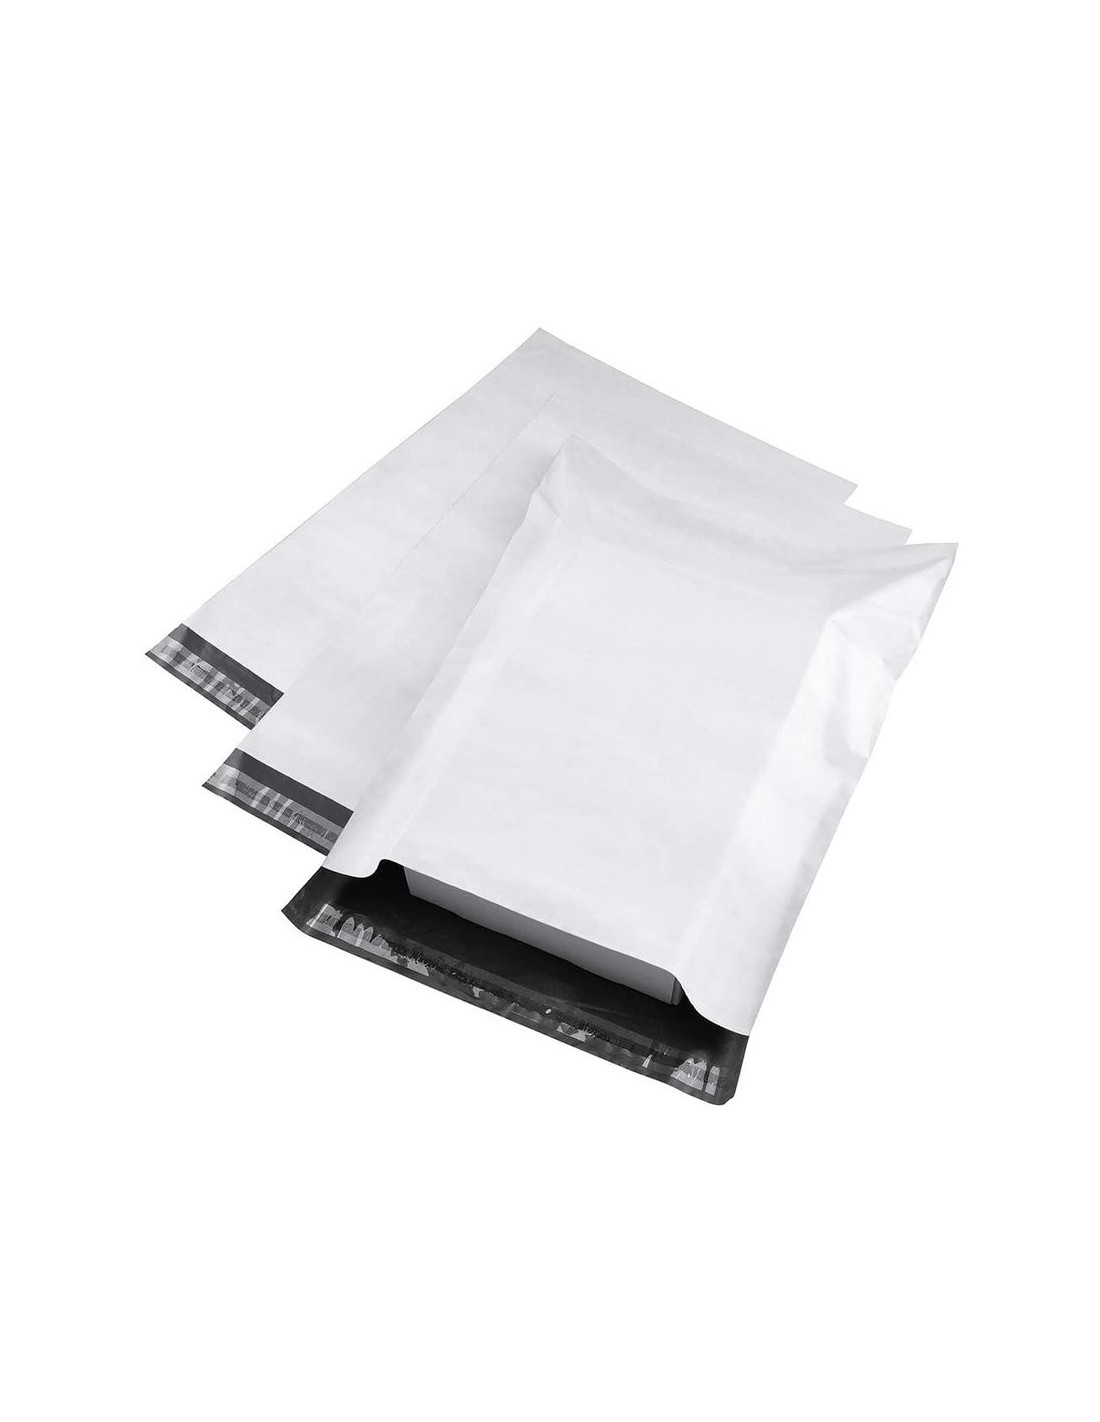 50 x Pochette plastique opaque / Enveloppes opaques / webshopbags A